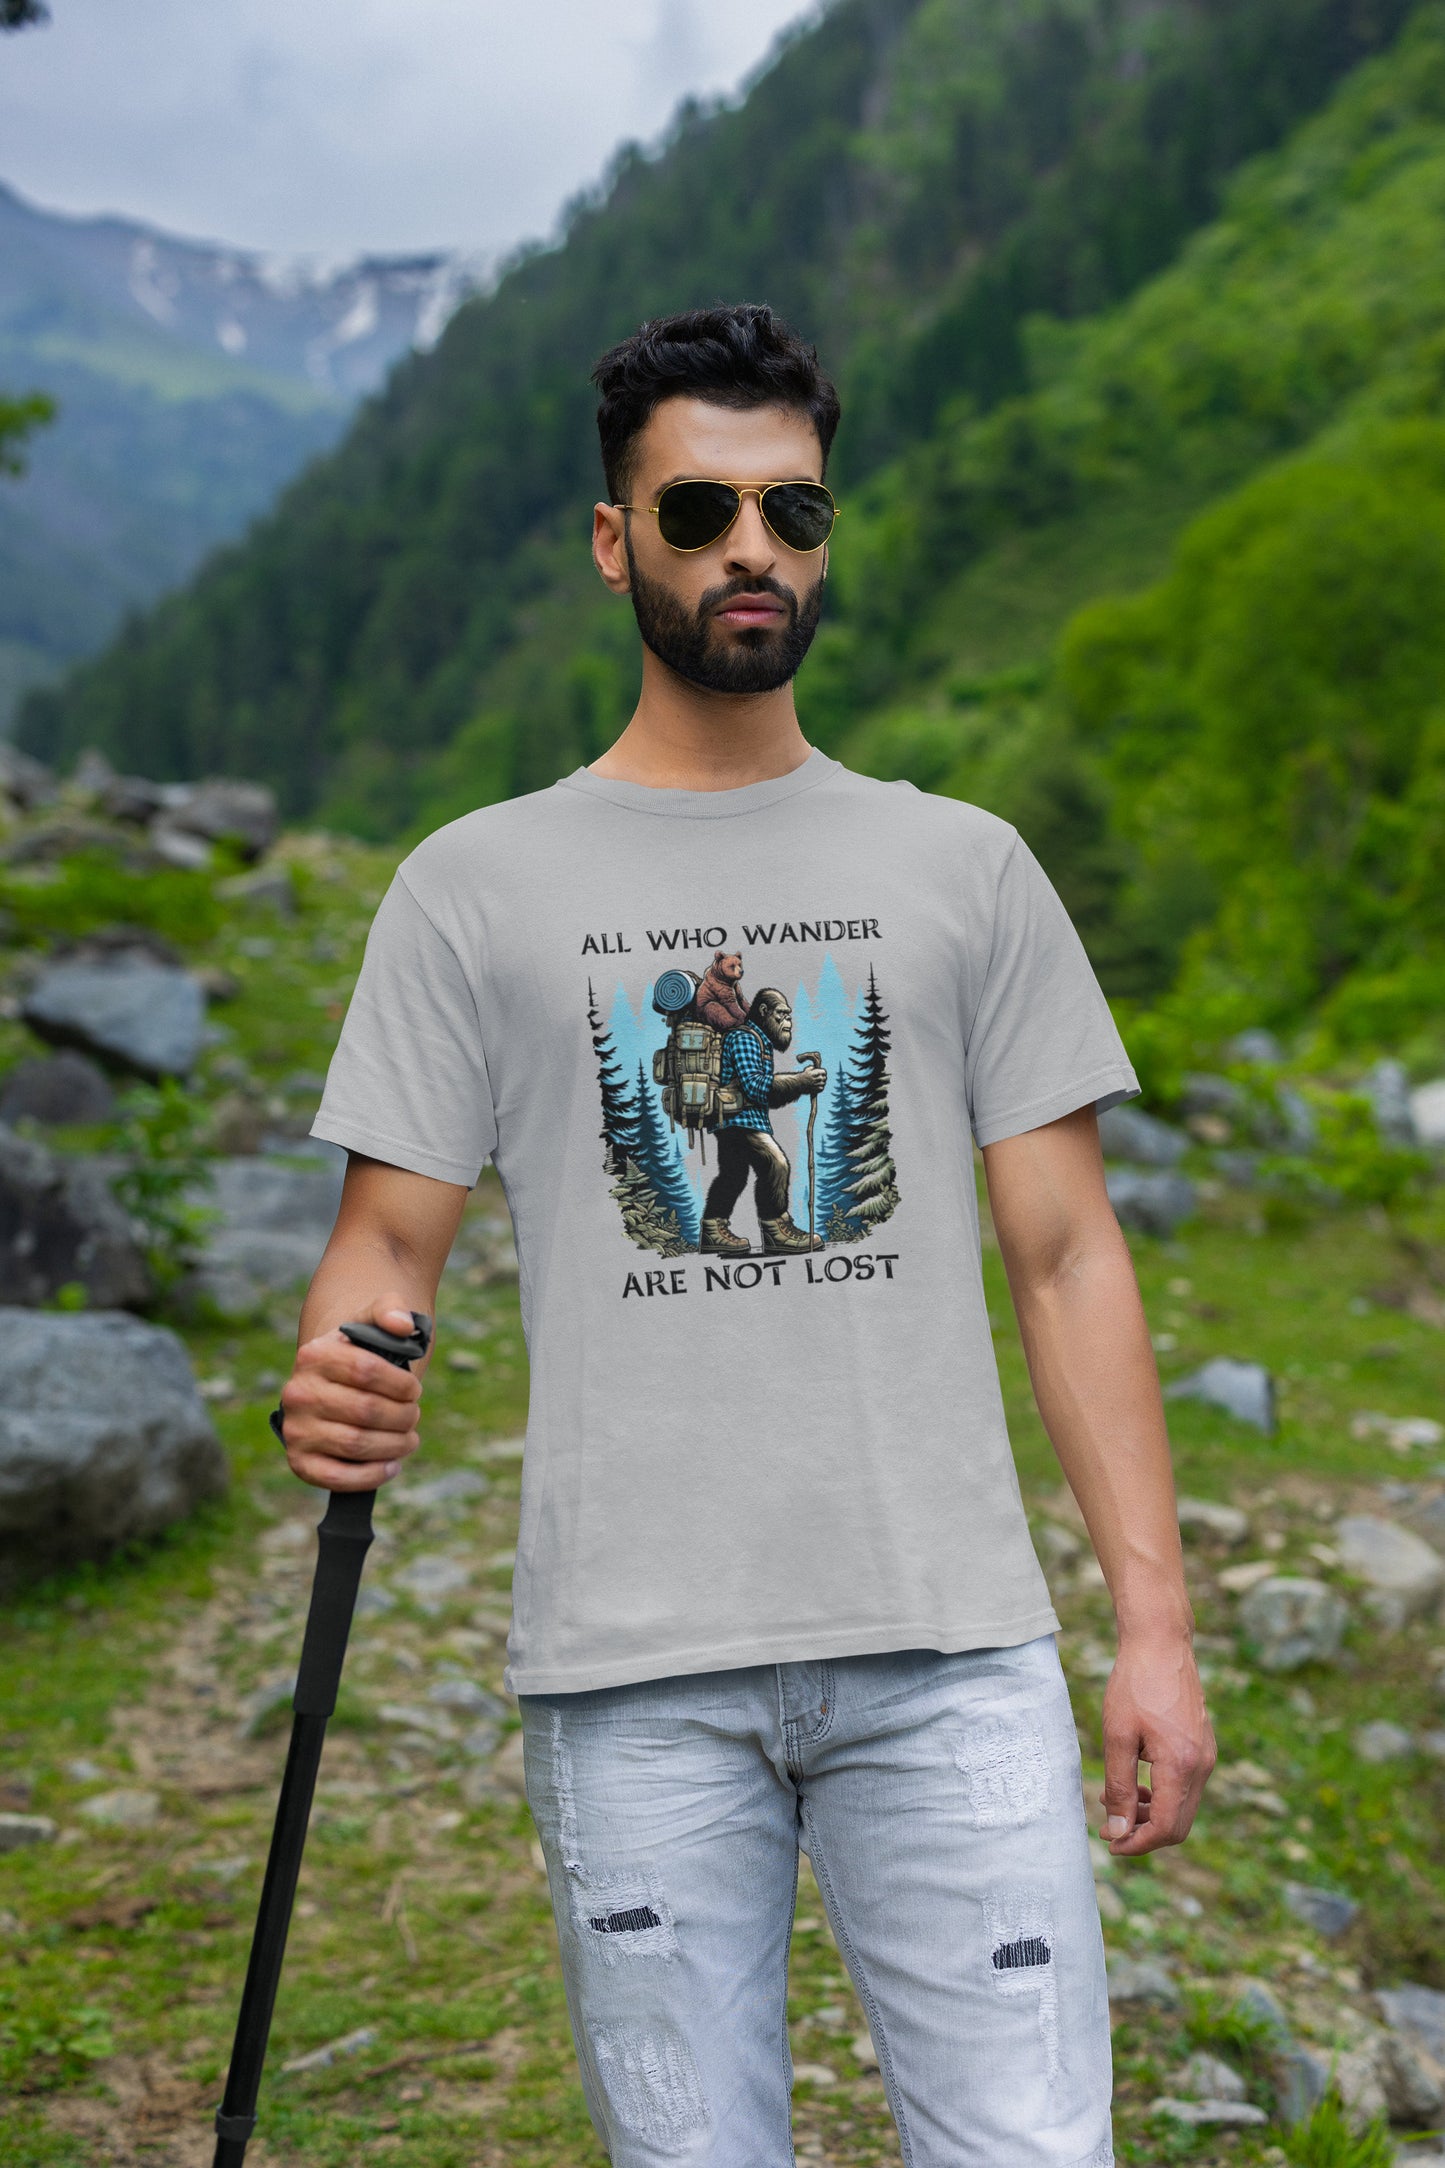 All who wander are not lost - hiking Bigfoot and bear cub t-shirt (grey)